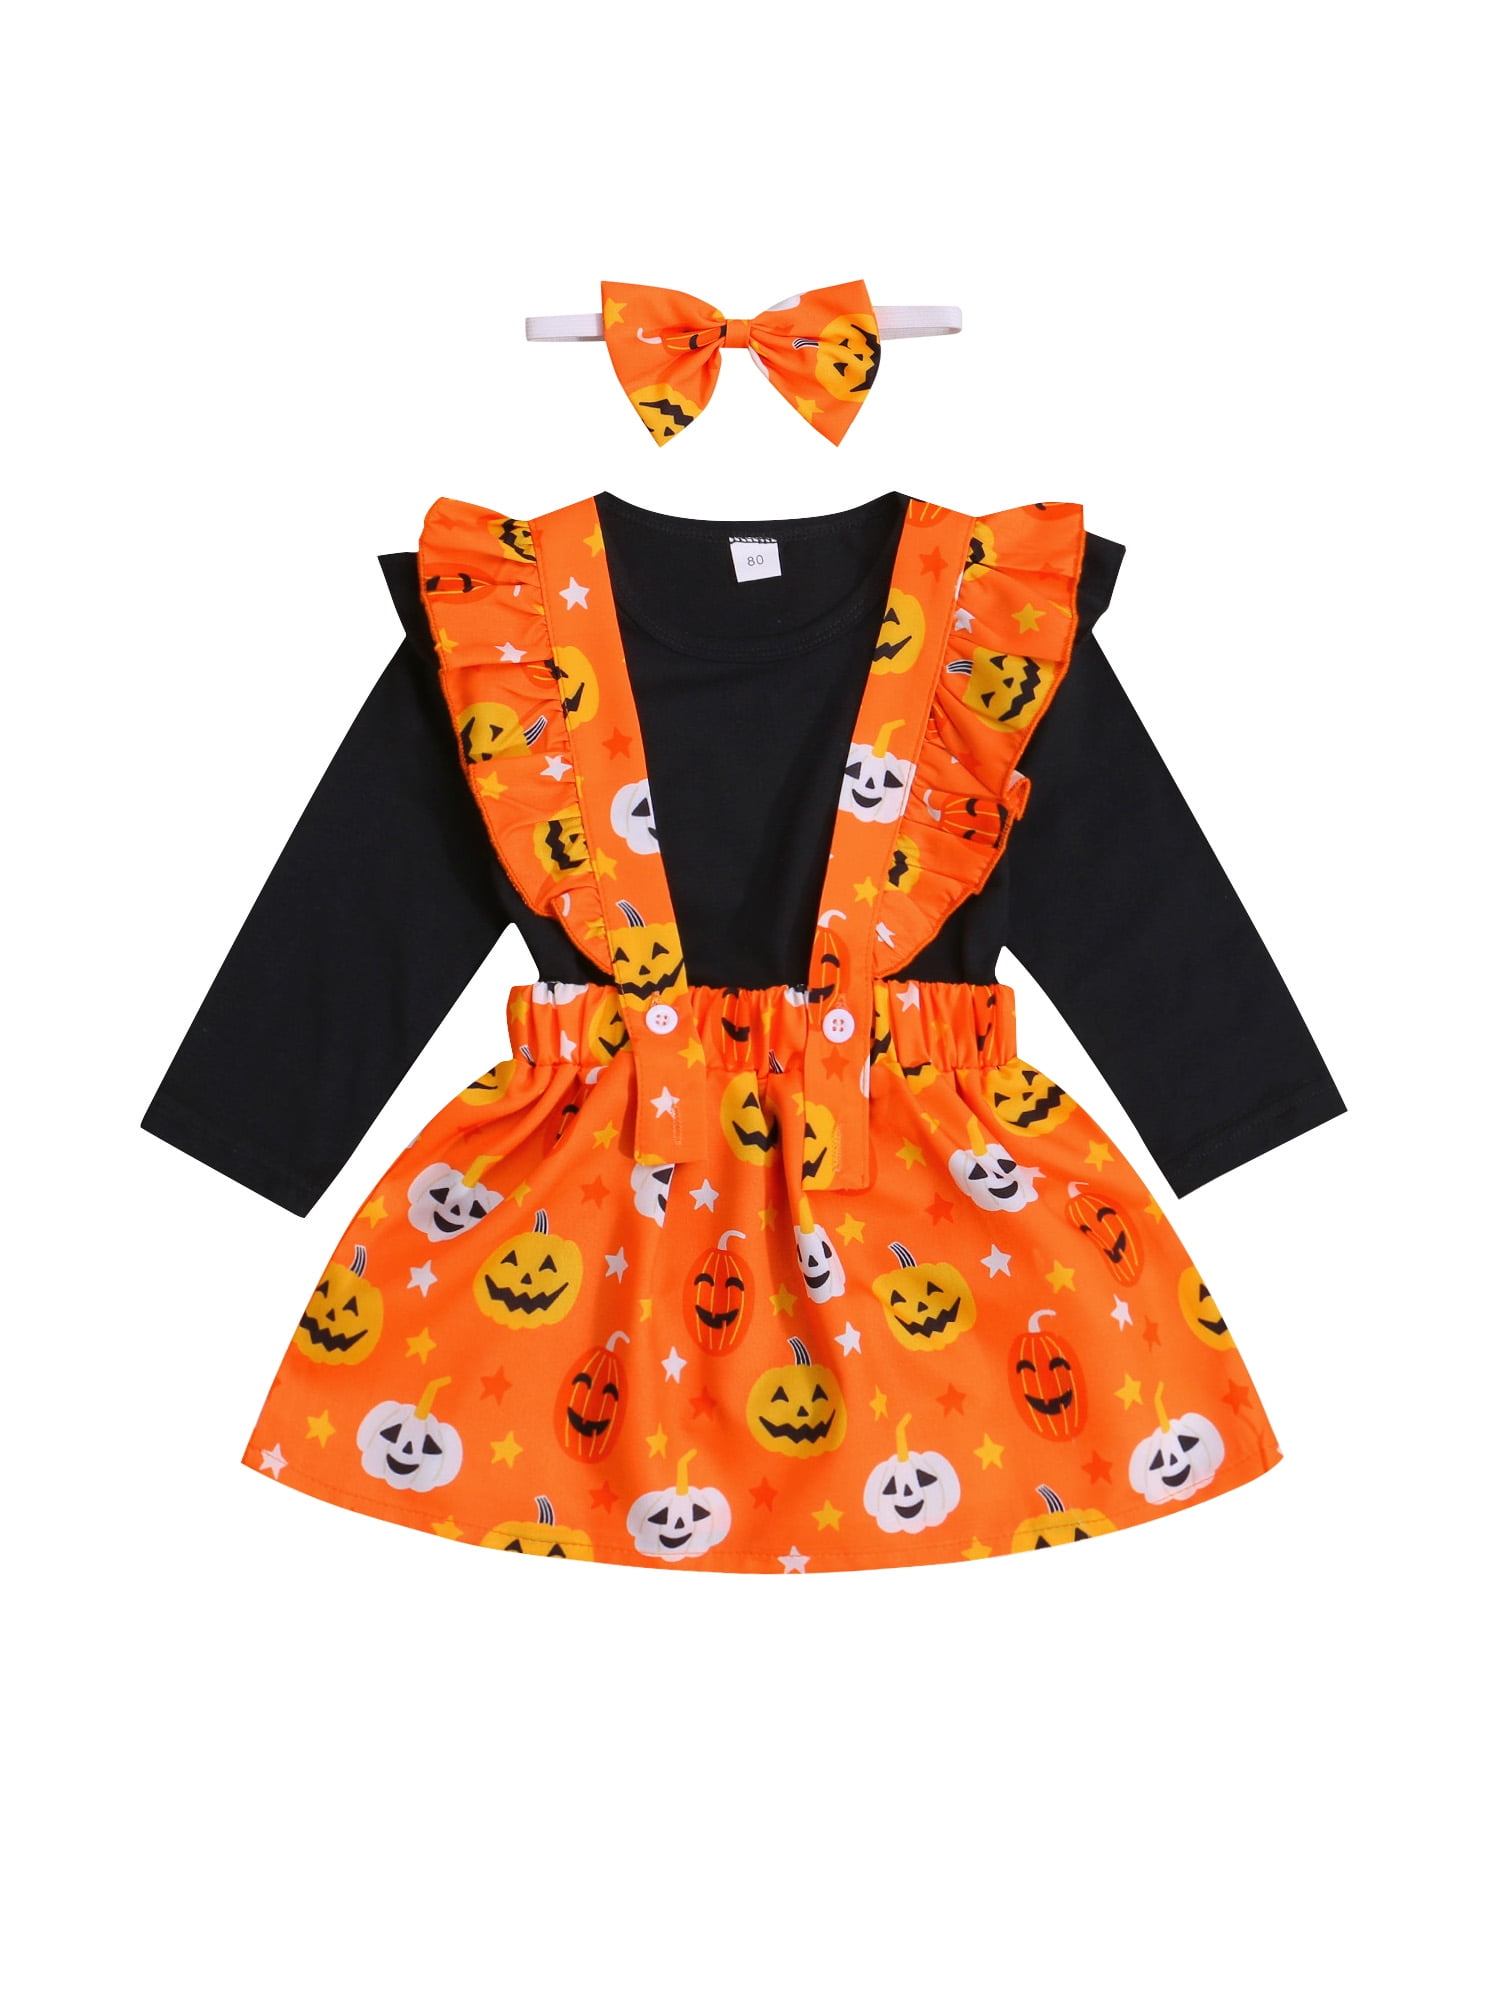 Winter Newborn Cute Cotton All Saints’Day Clothes Pumpkin Playsuit Long Sleeves Romper Jumpsuit Outfit Set